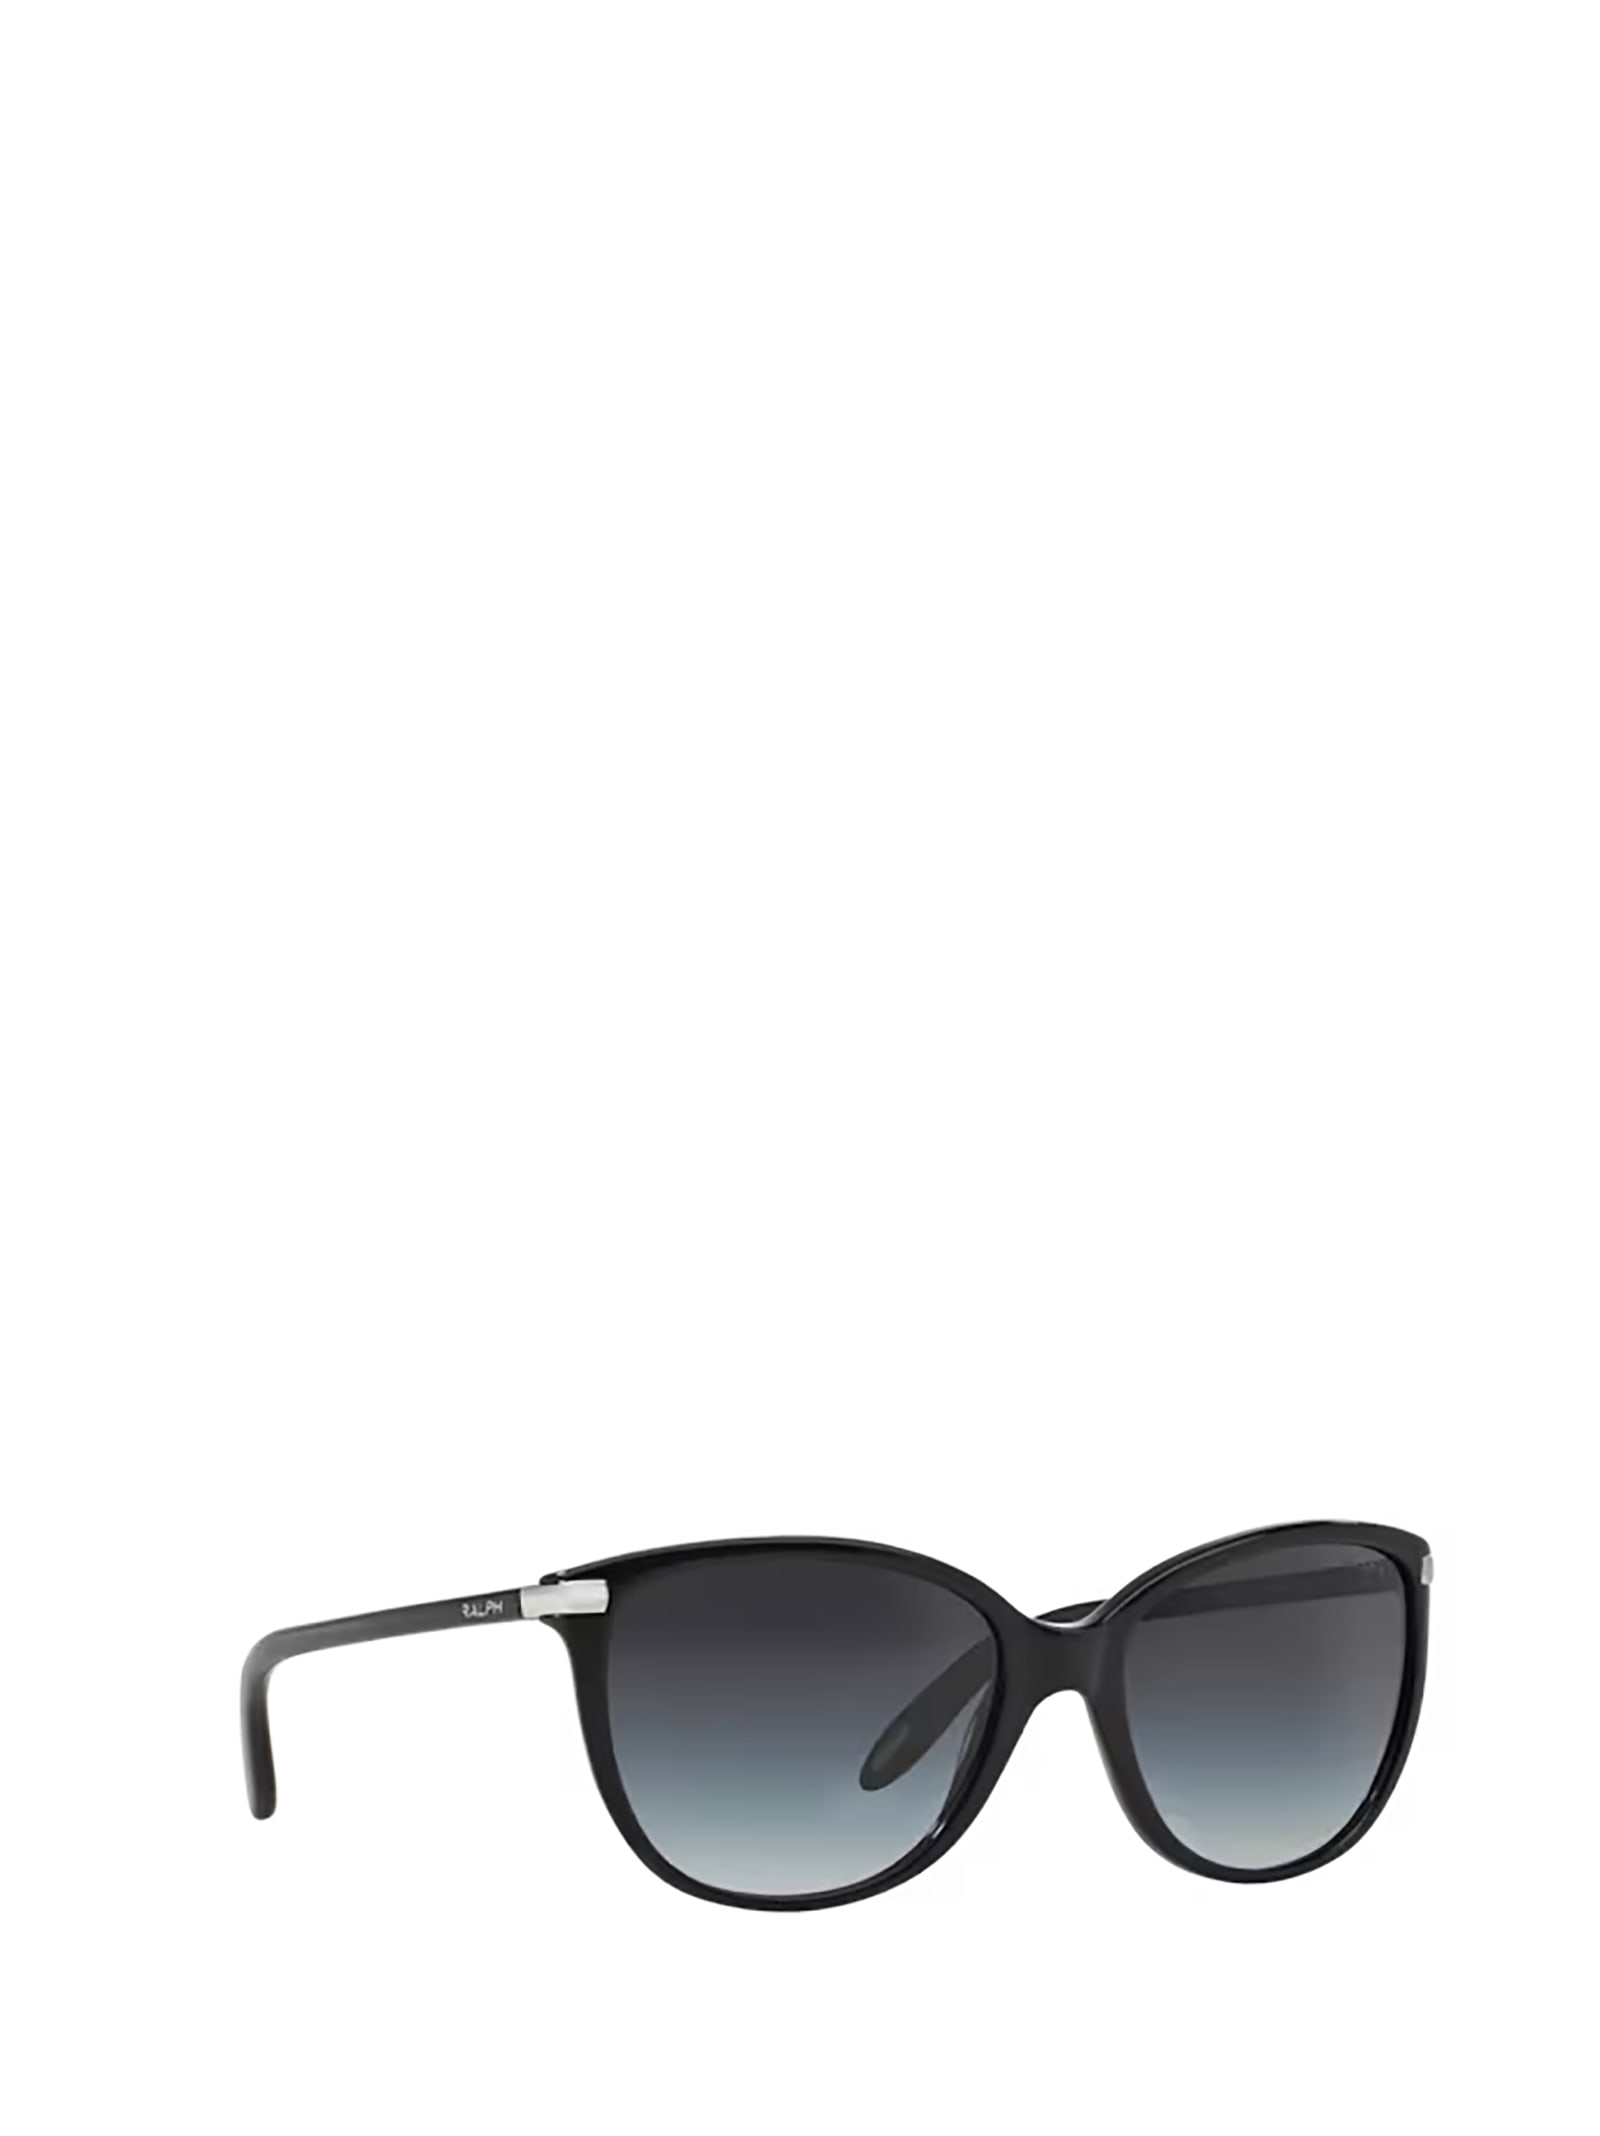 Shop Polo Ralph Lauren Ra5160 Shiny Black Sunglasses